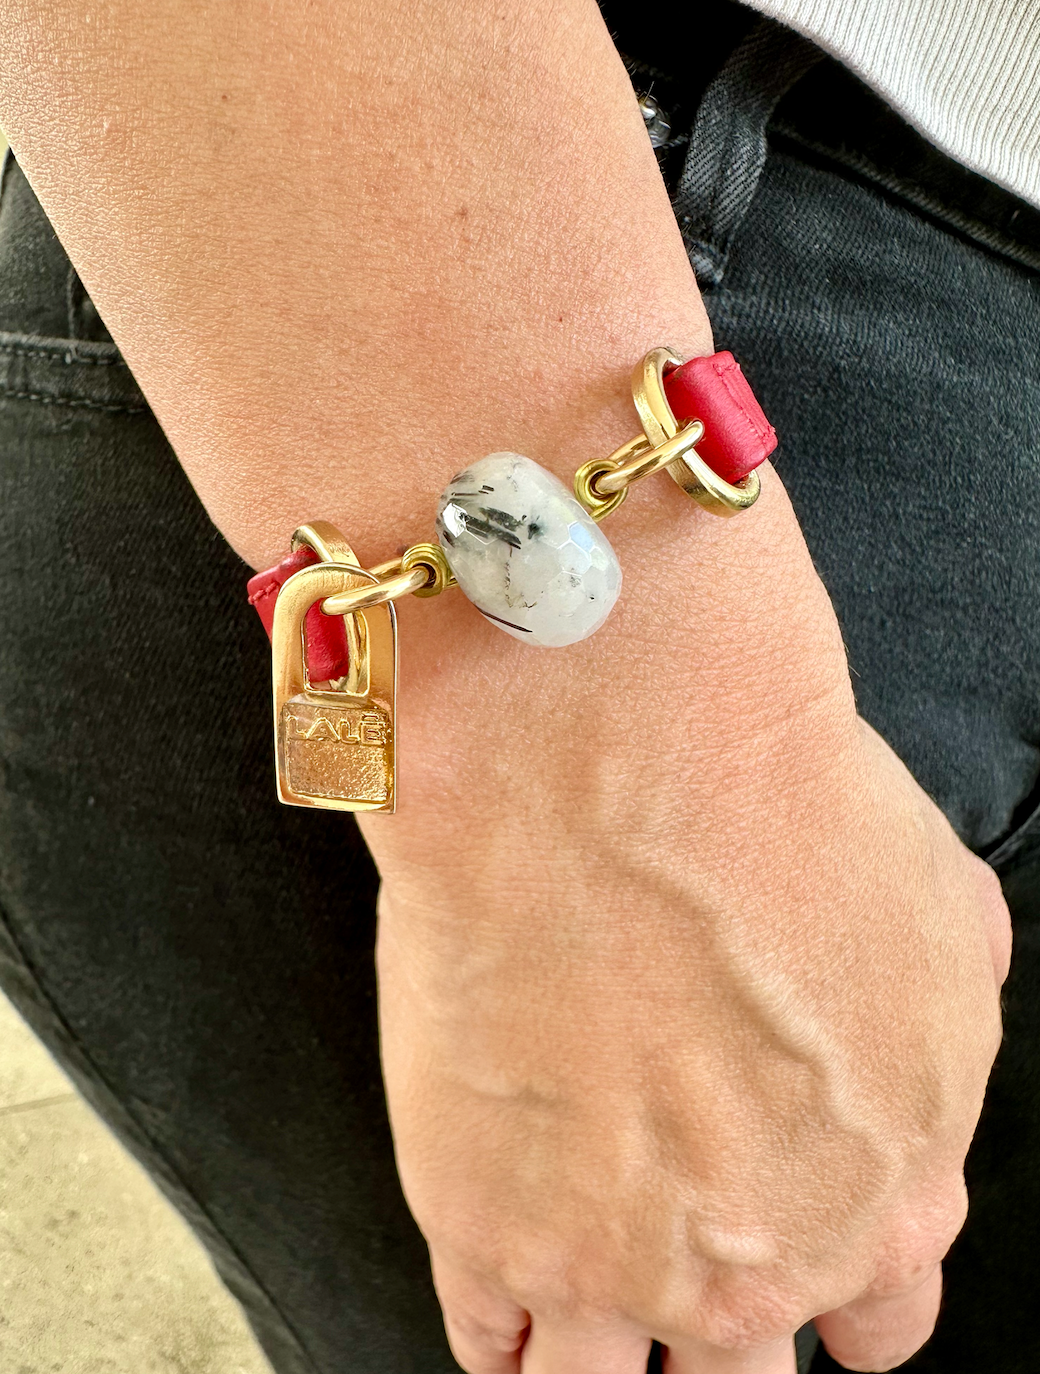 Handmade Red Leather Bracelet with Semi-Precious Stone Accent - LALEBRACELETS